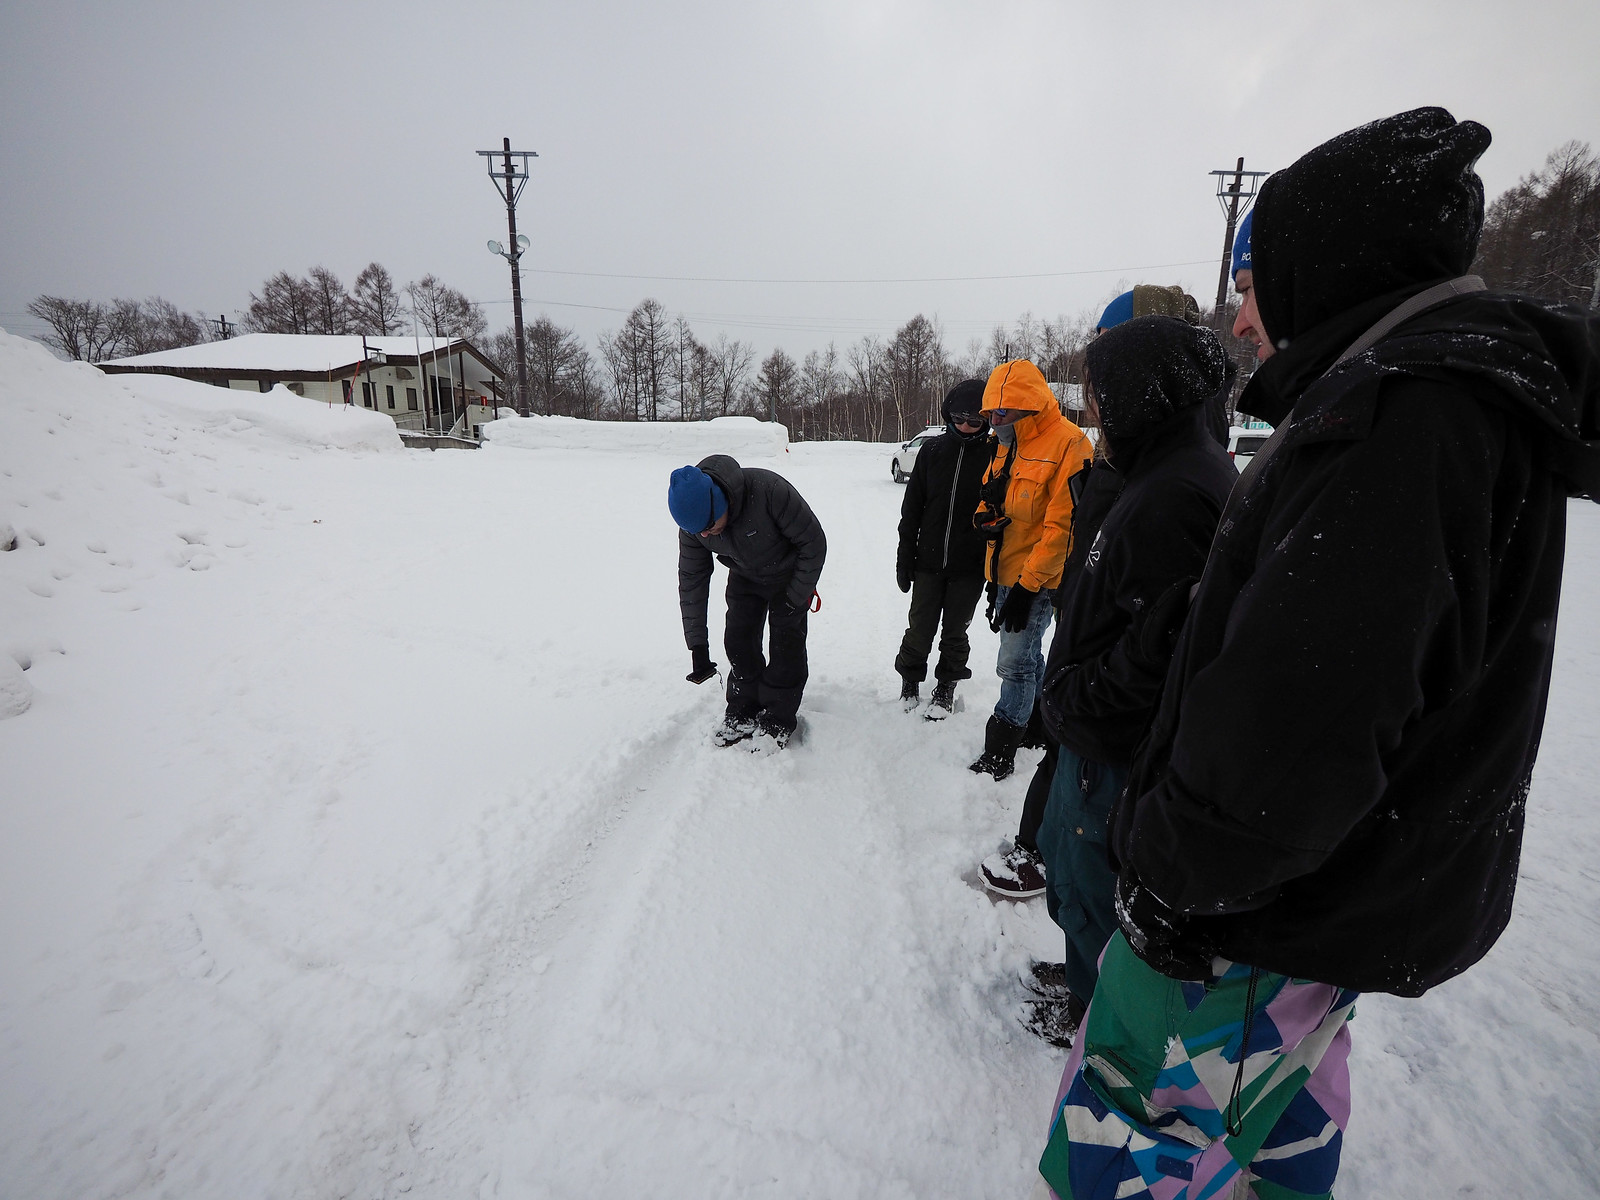 Whiteroom Tours AST2 Avalanche Safety Training Course (Niseko, Hokkaido, Japan)